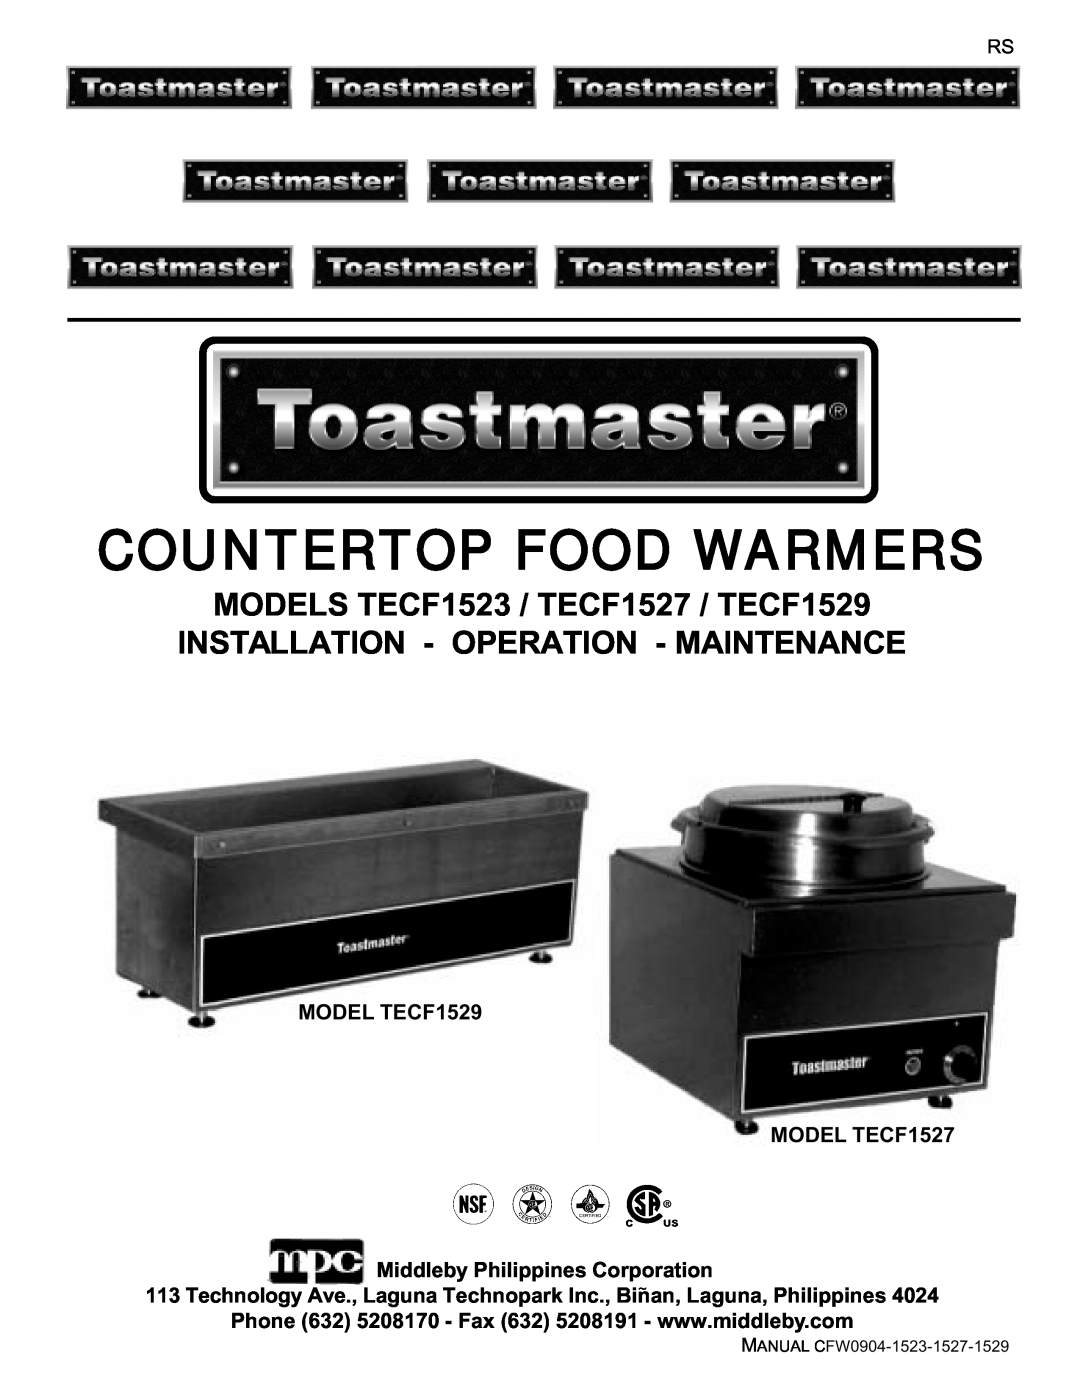 Toastmaster manual Countertop Food Warmers, MODELS TECF1523 / TECF1527 / TECF1529, MODEL TECF1529 MODEL TECF1527 